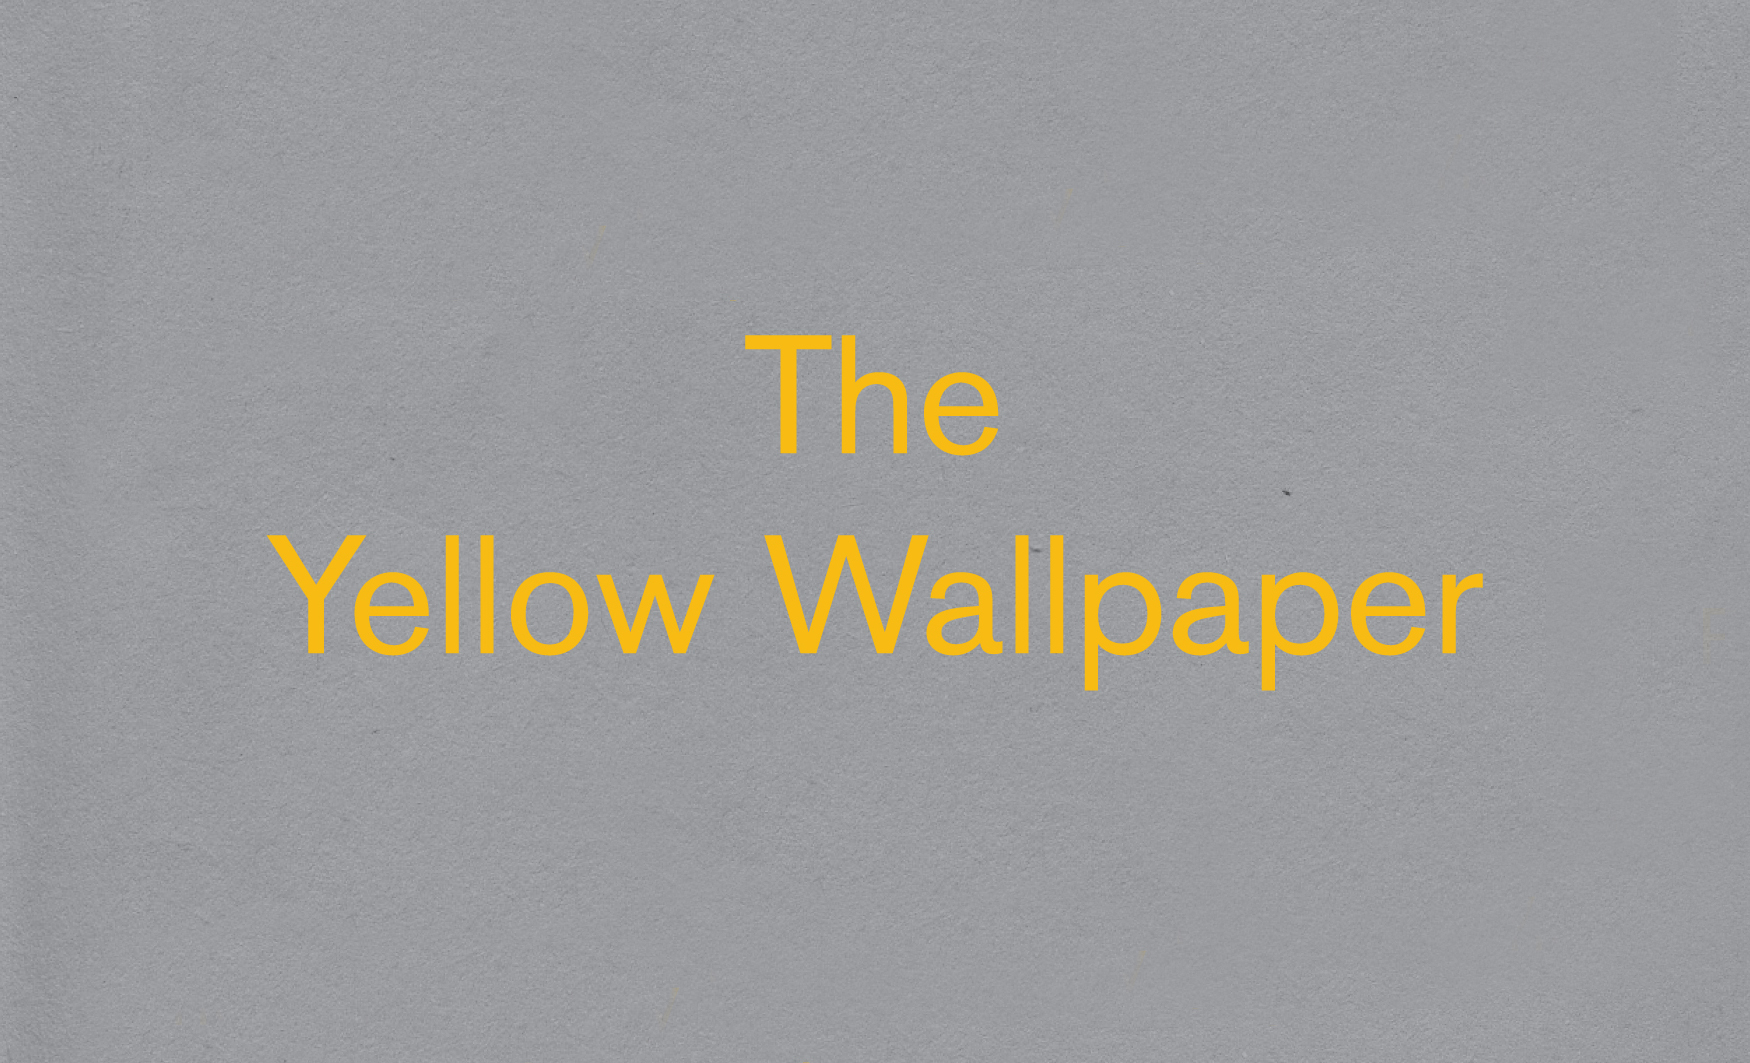 THE YELLOW WALLPAPER